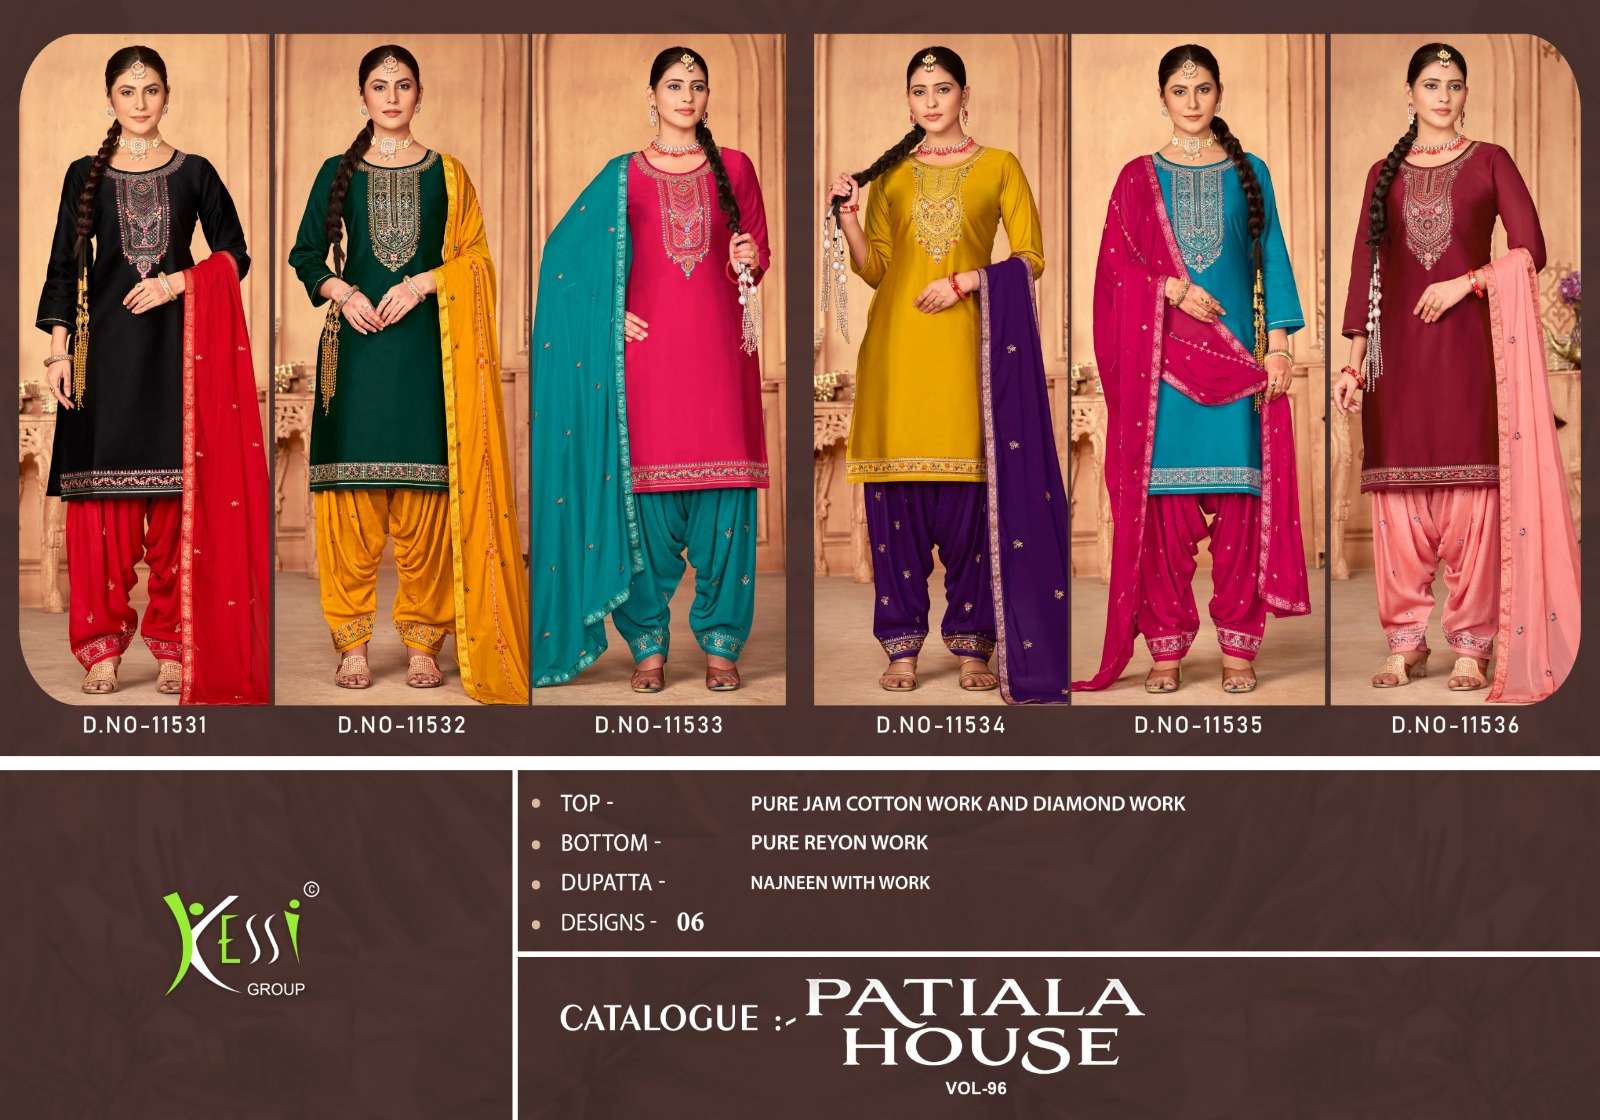 Kessi Patiala House Vol 96 Dress Material Wholesale catalog